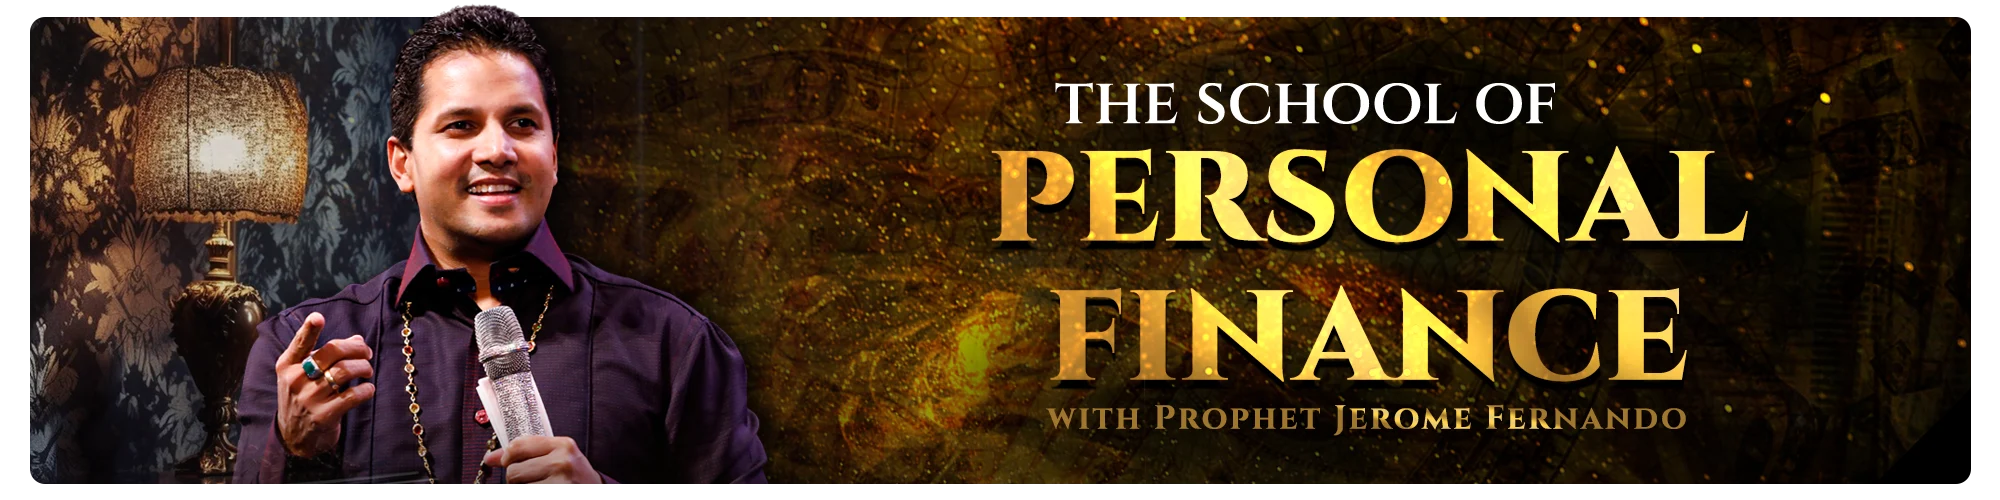 The School of Personal Finance with Prophet Jerome Fernando